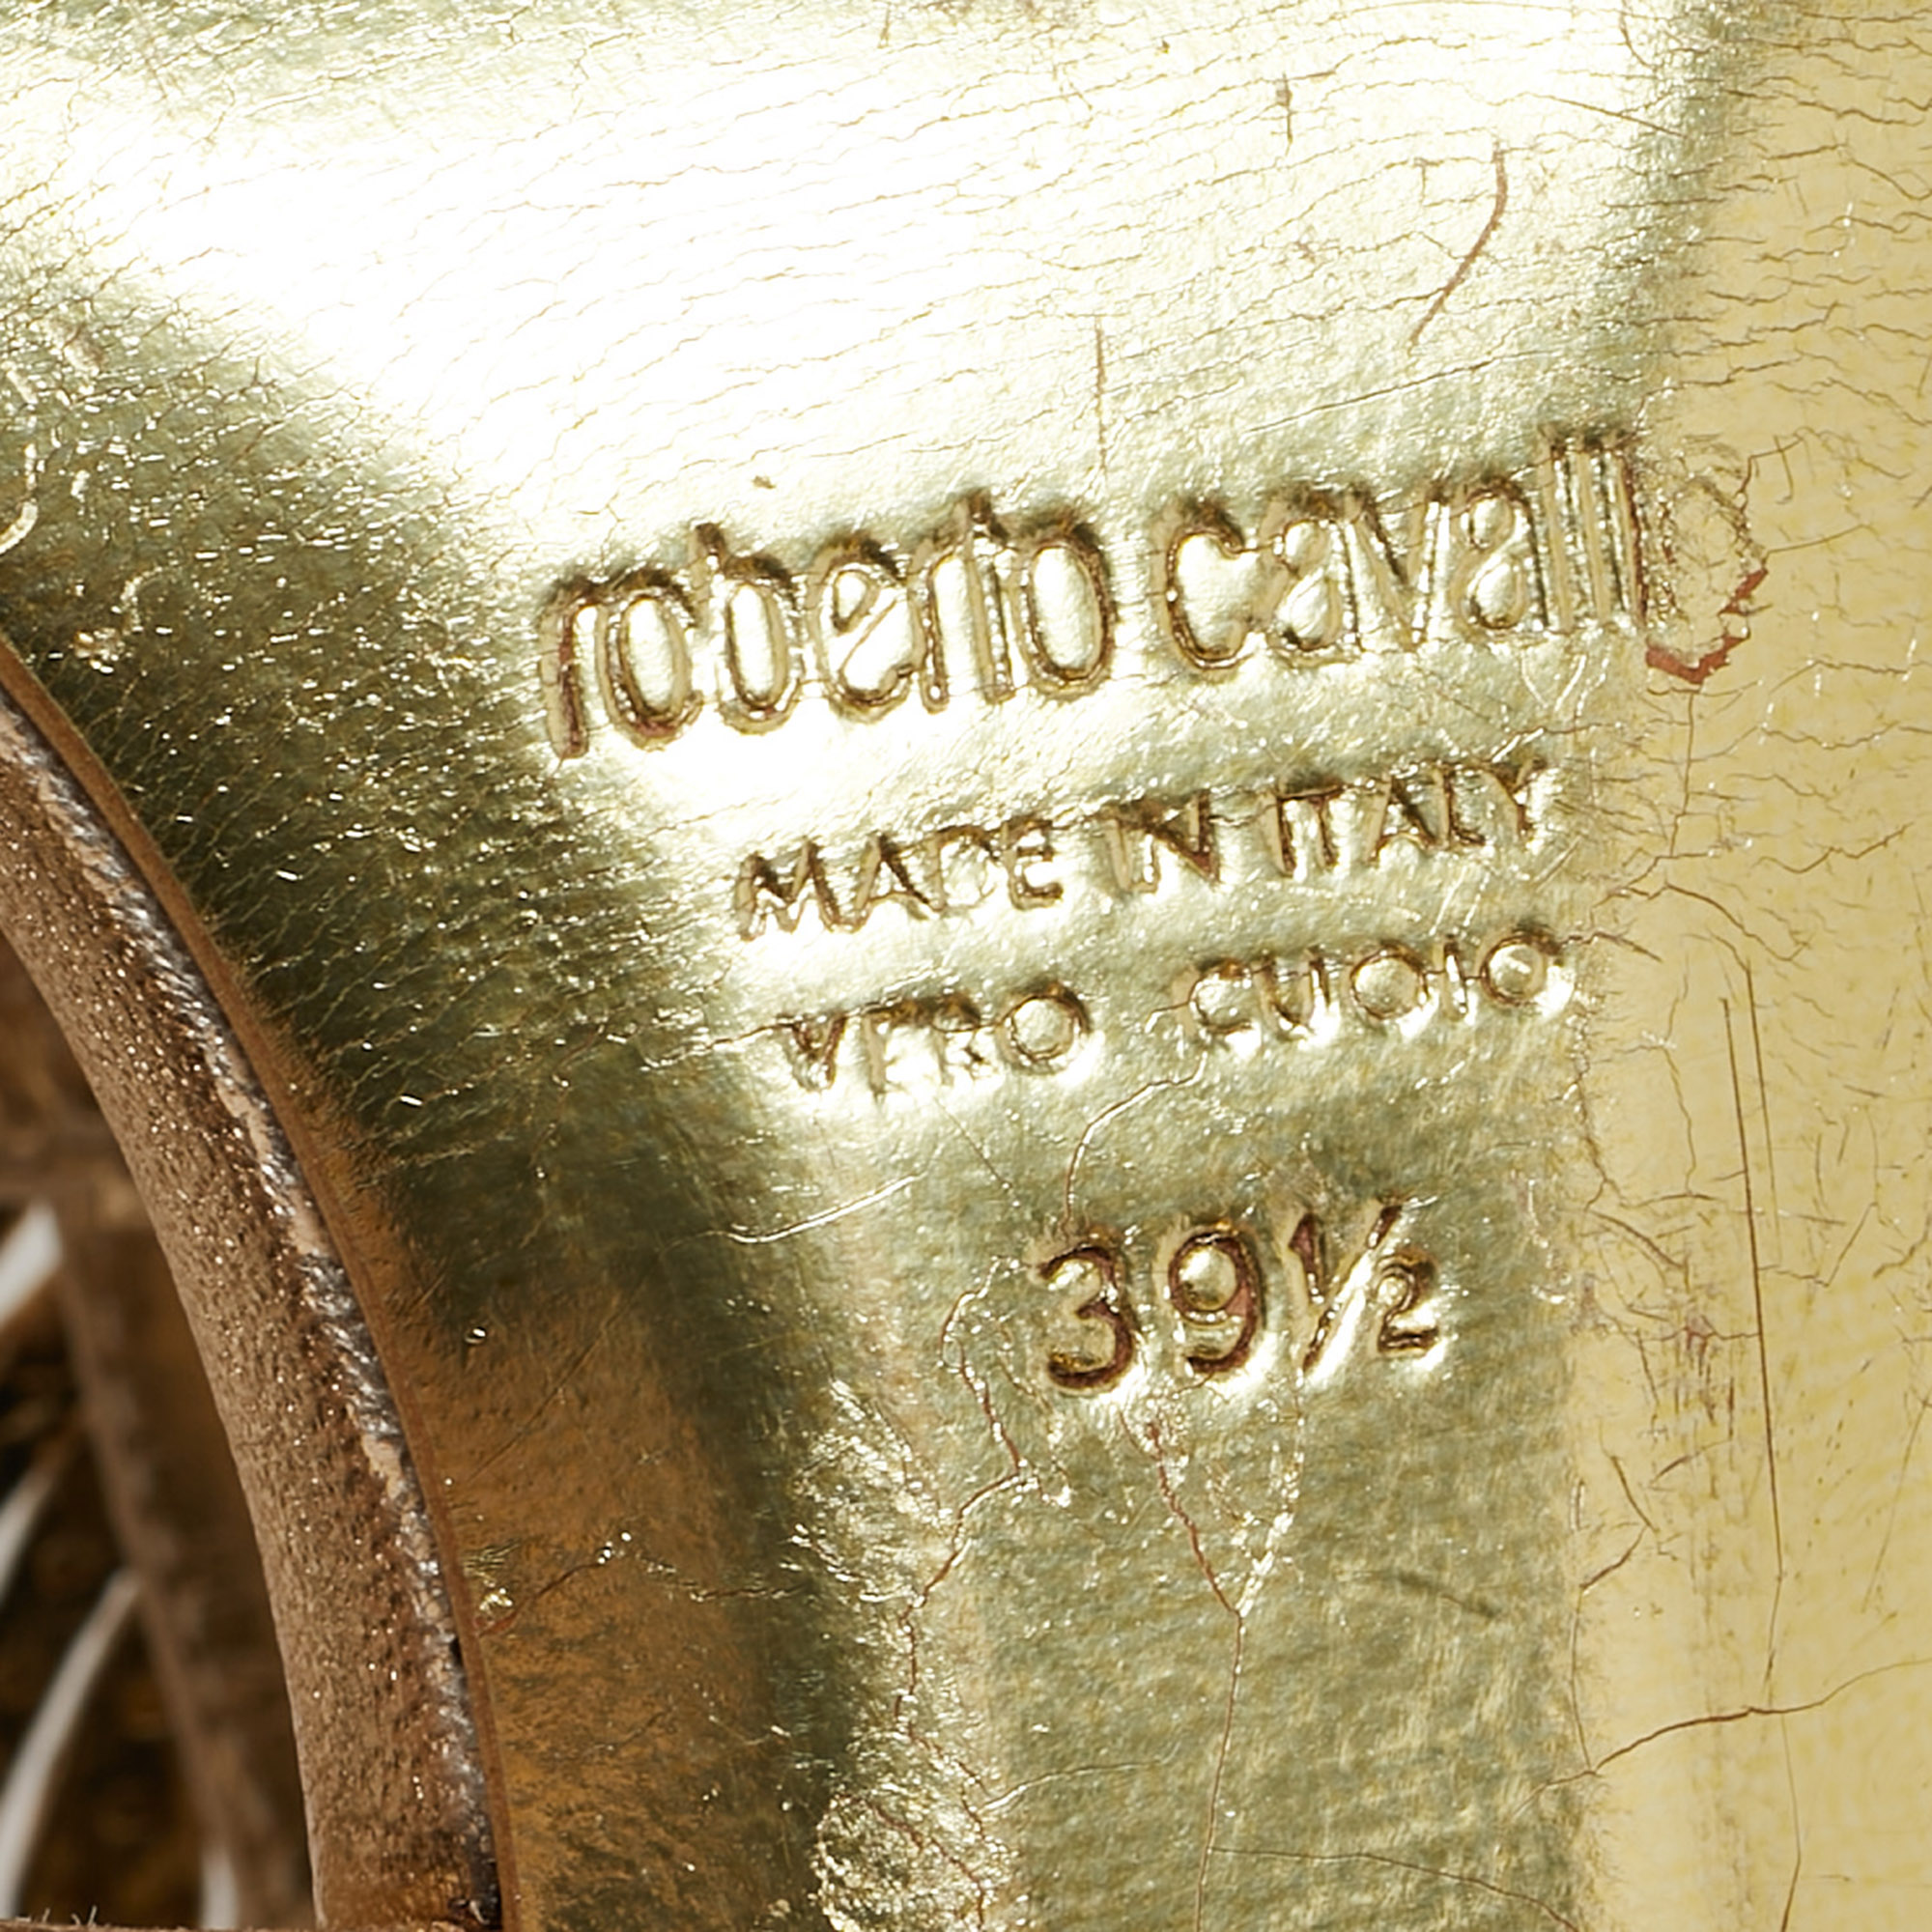 Roberto Cavalli Metallic Gold Ankle Strap Sandals Size 39.5